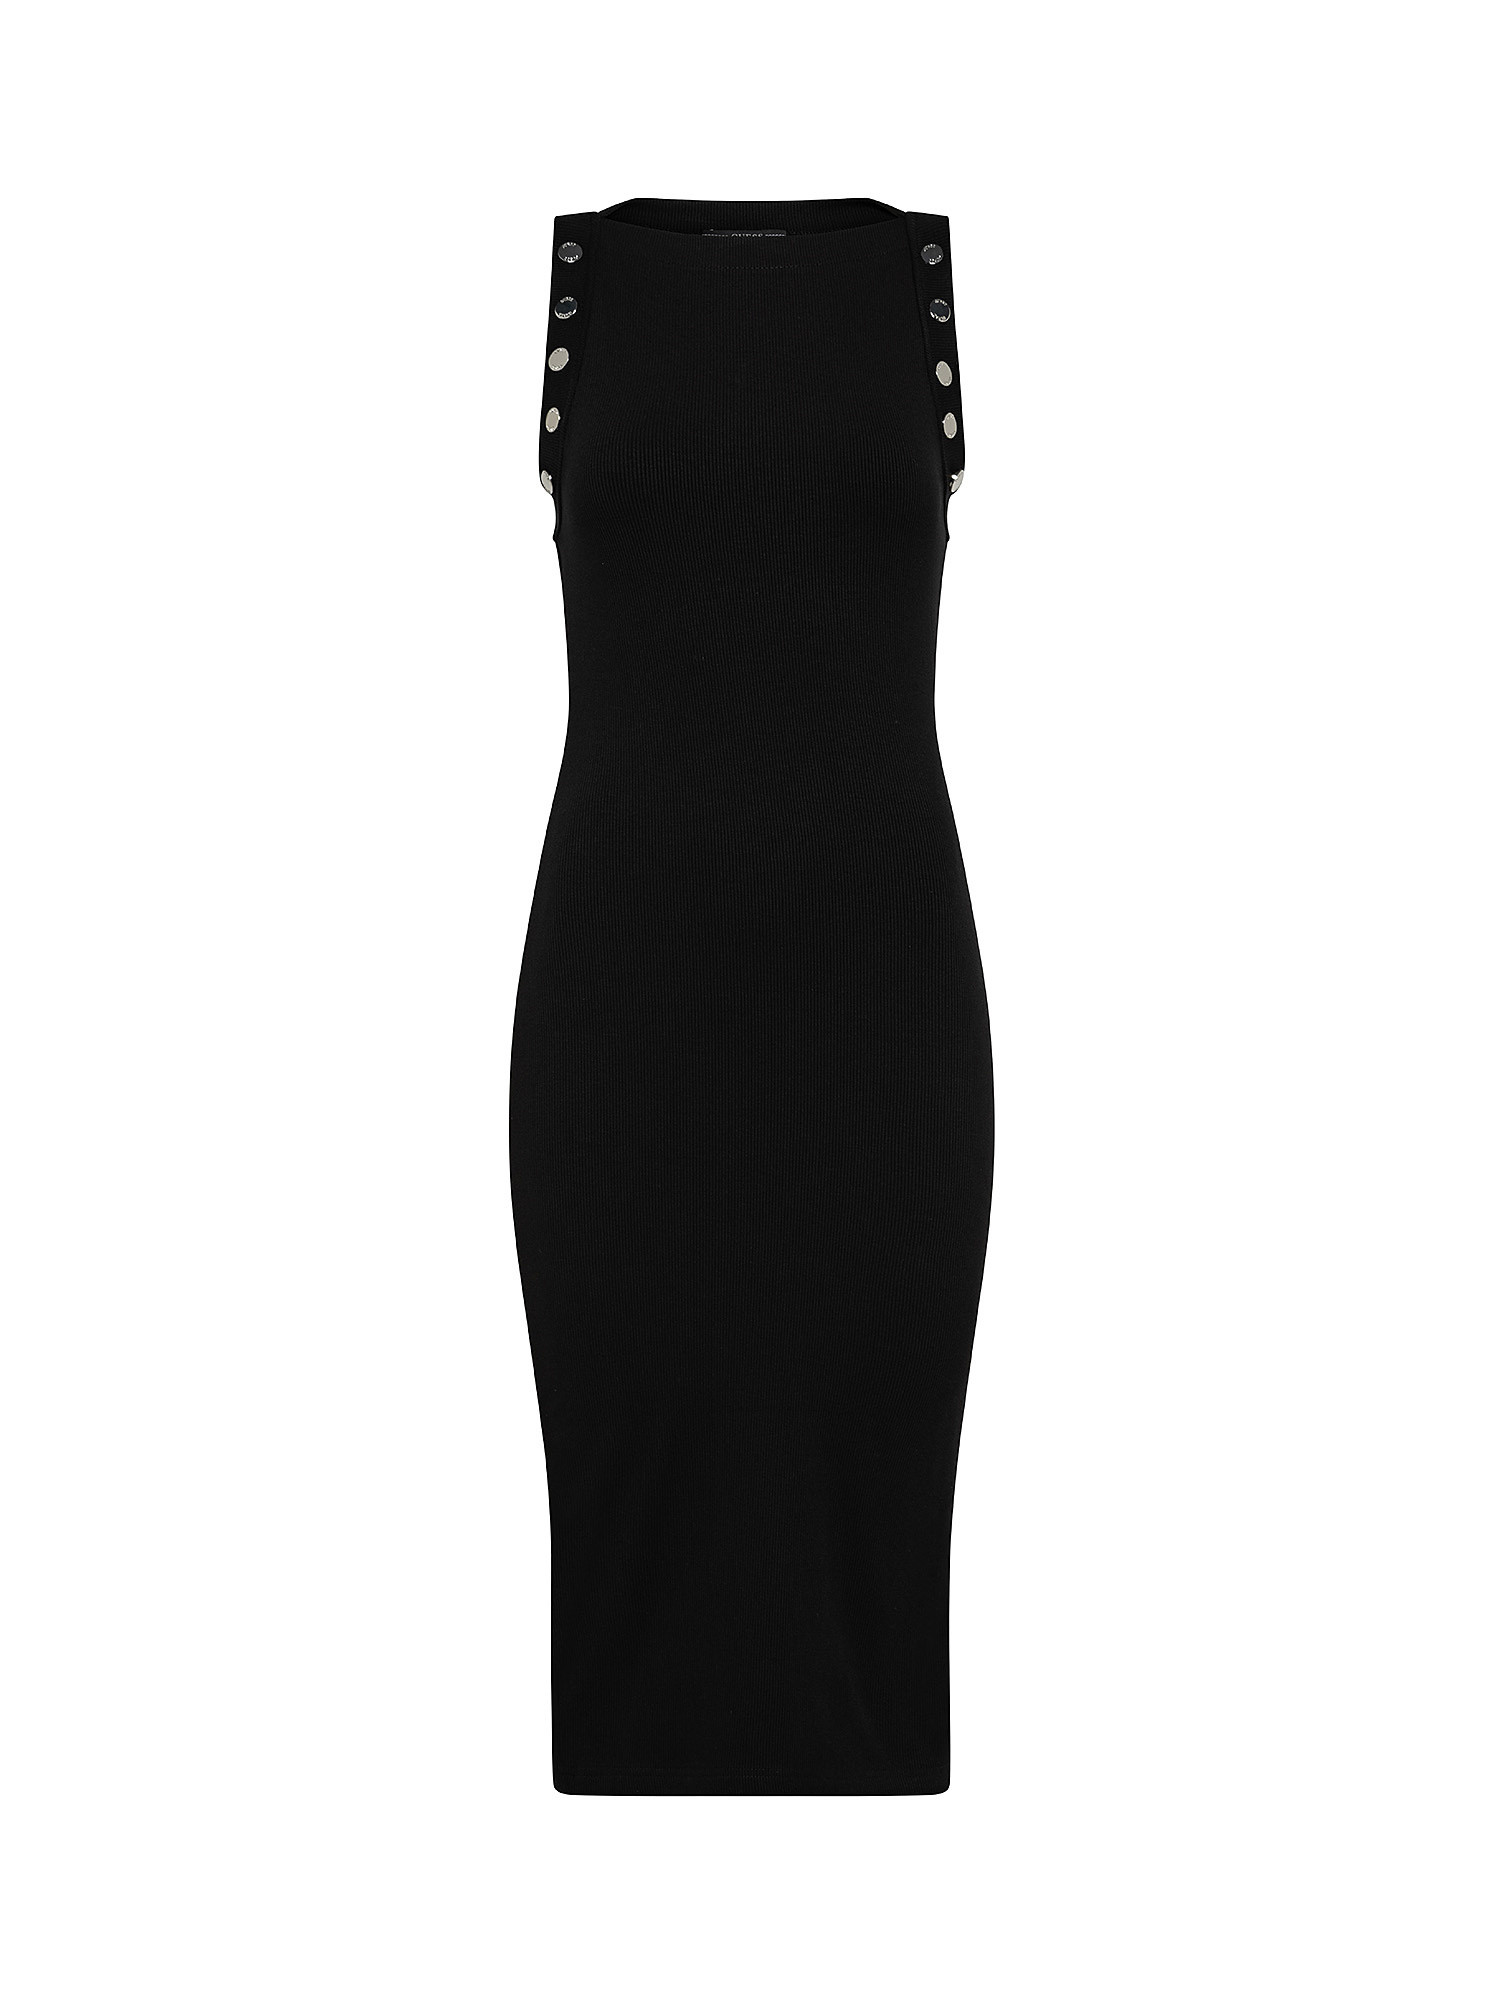 Bodycon rib dress, Black, large image number 0